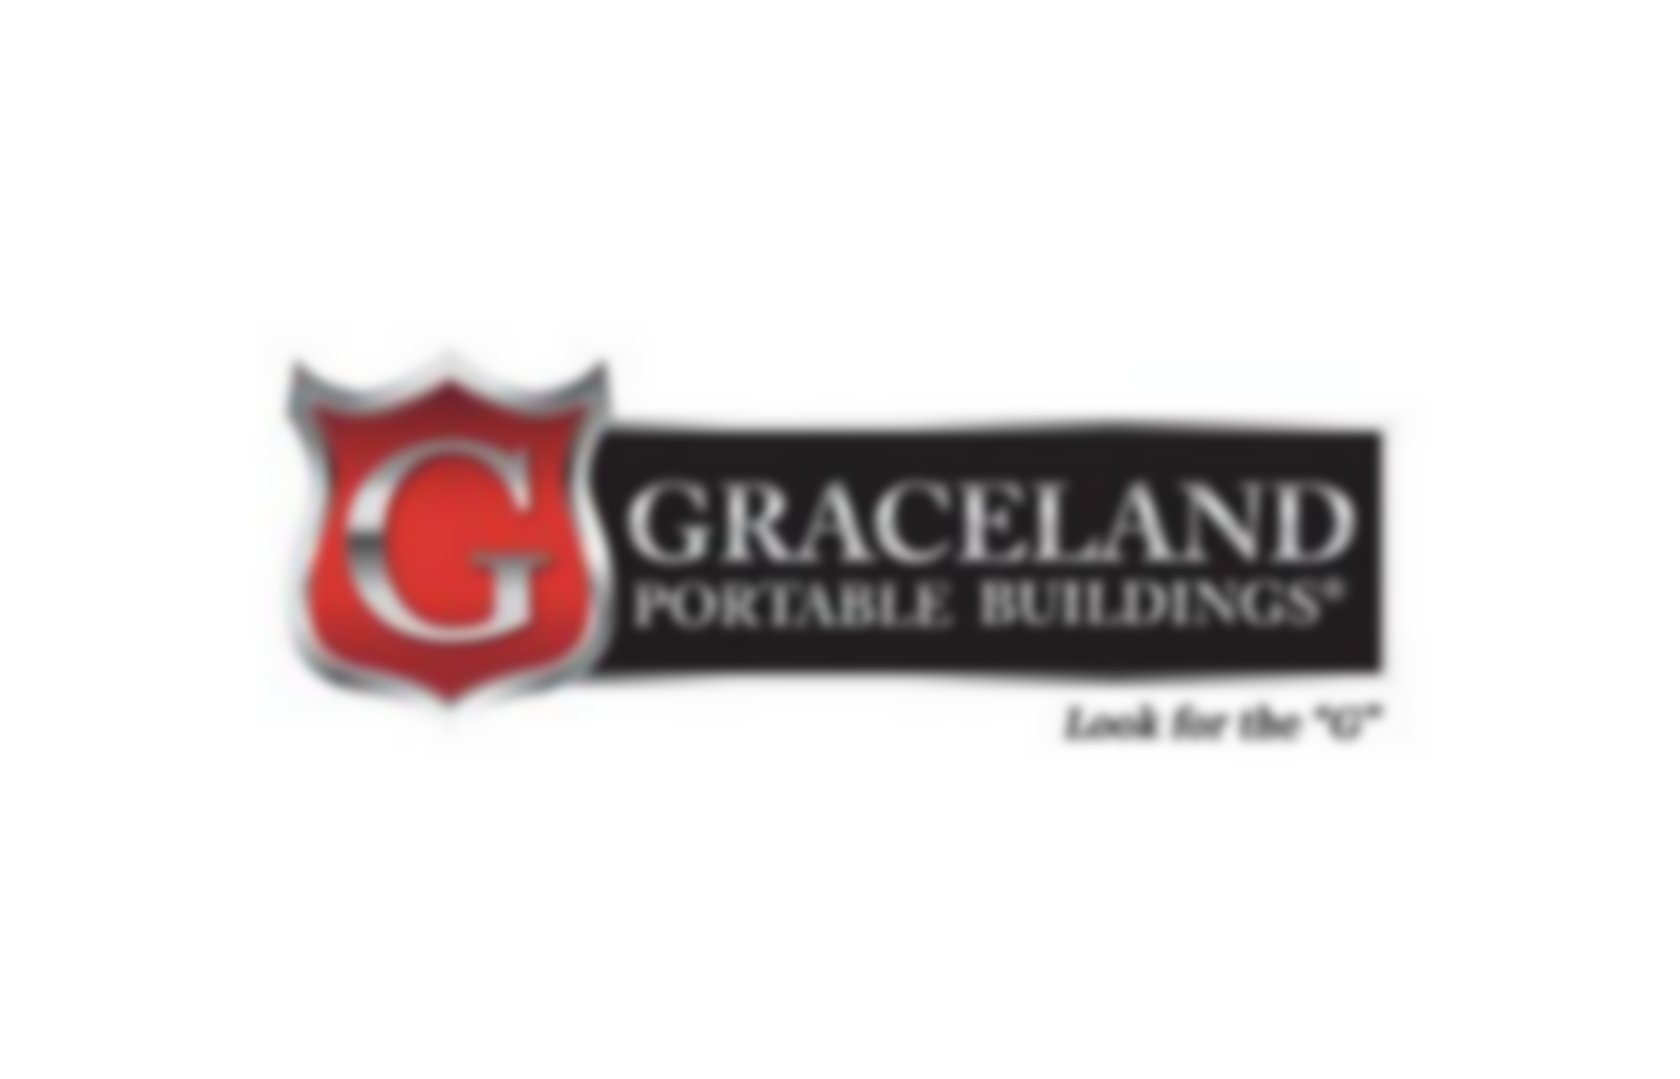 Graceland Portable Buildings (gracelandportablebuildings) | Pearltrees